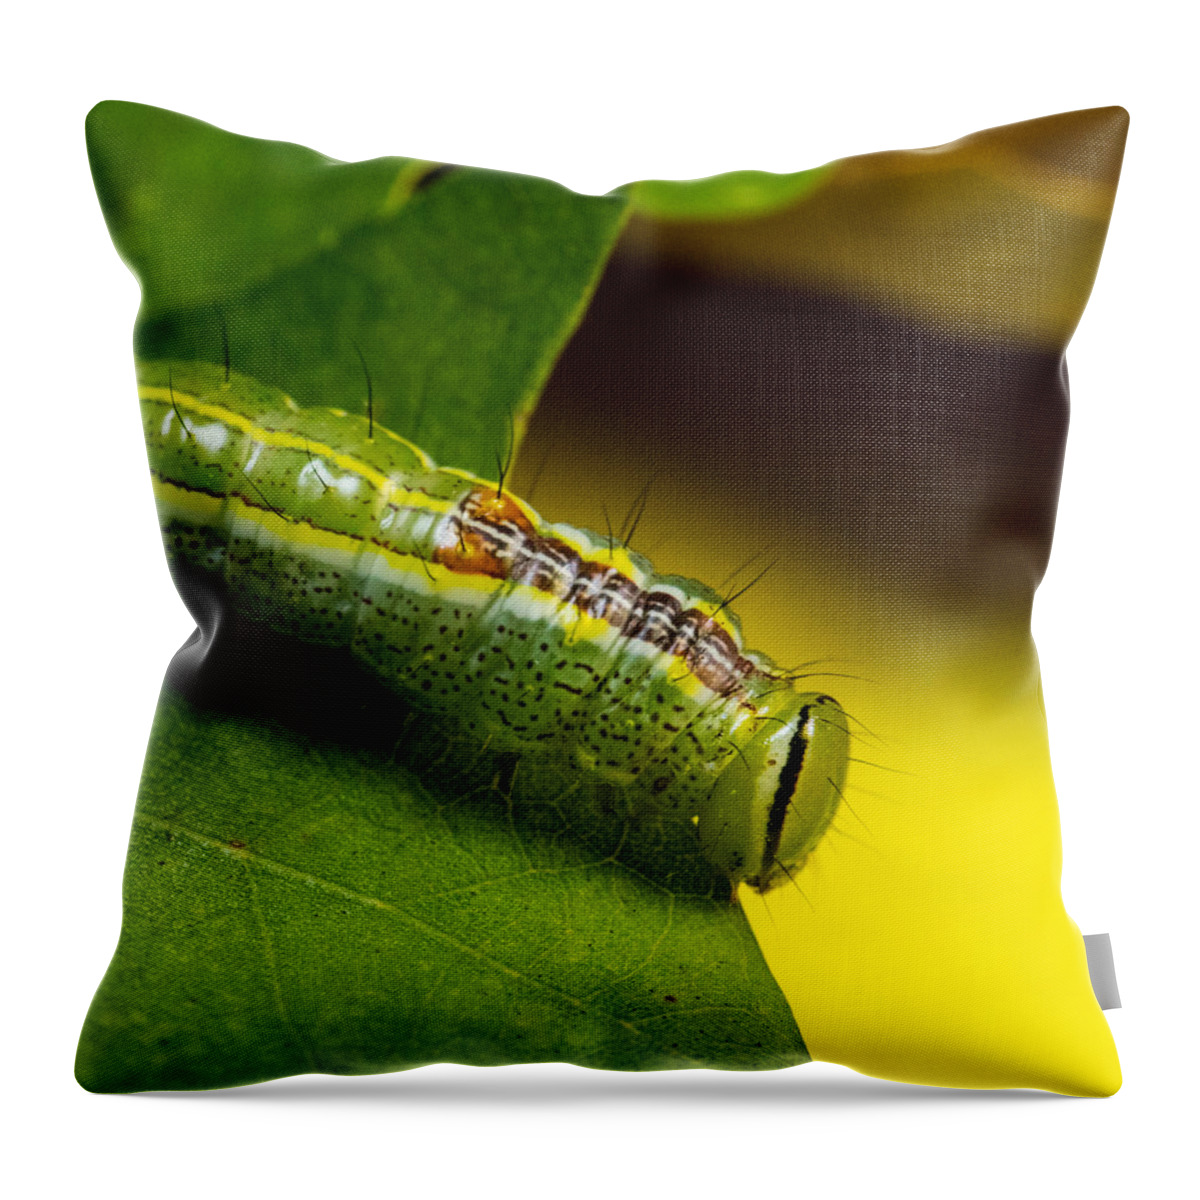 Variable Throw Pillow featuring the photograph Variable Oak Leaf Caterpillar on Oak Leaf by Douglas Barnett